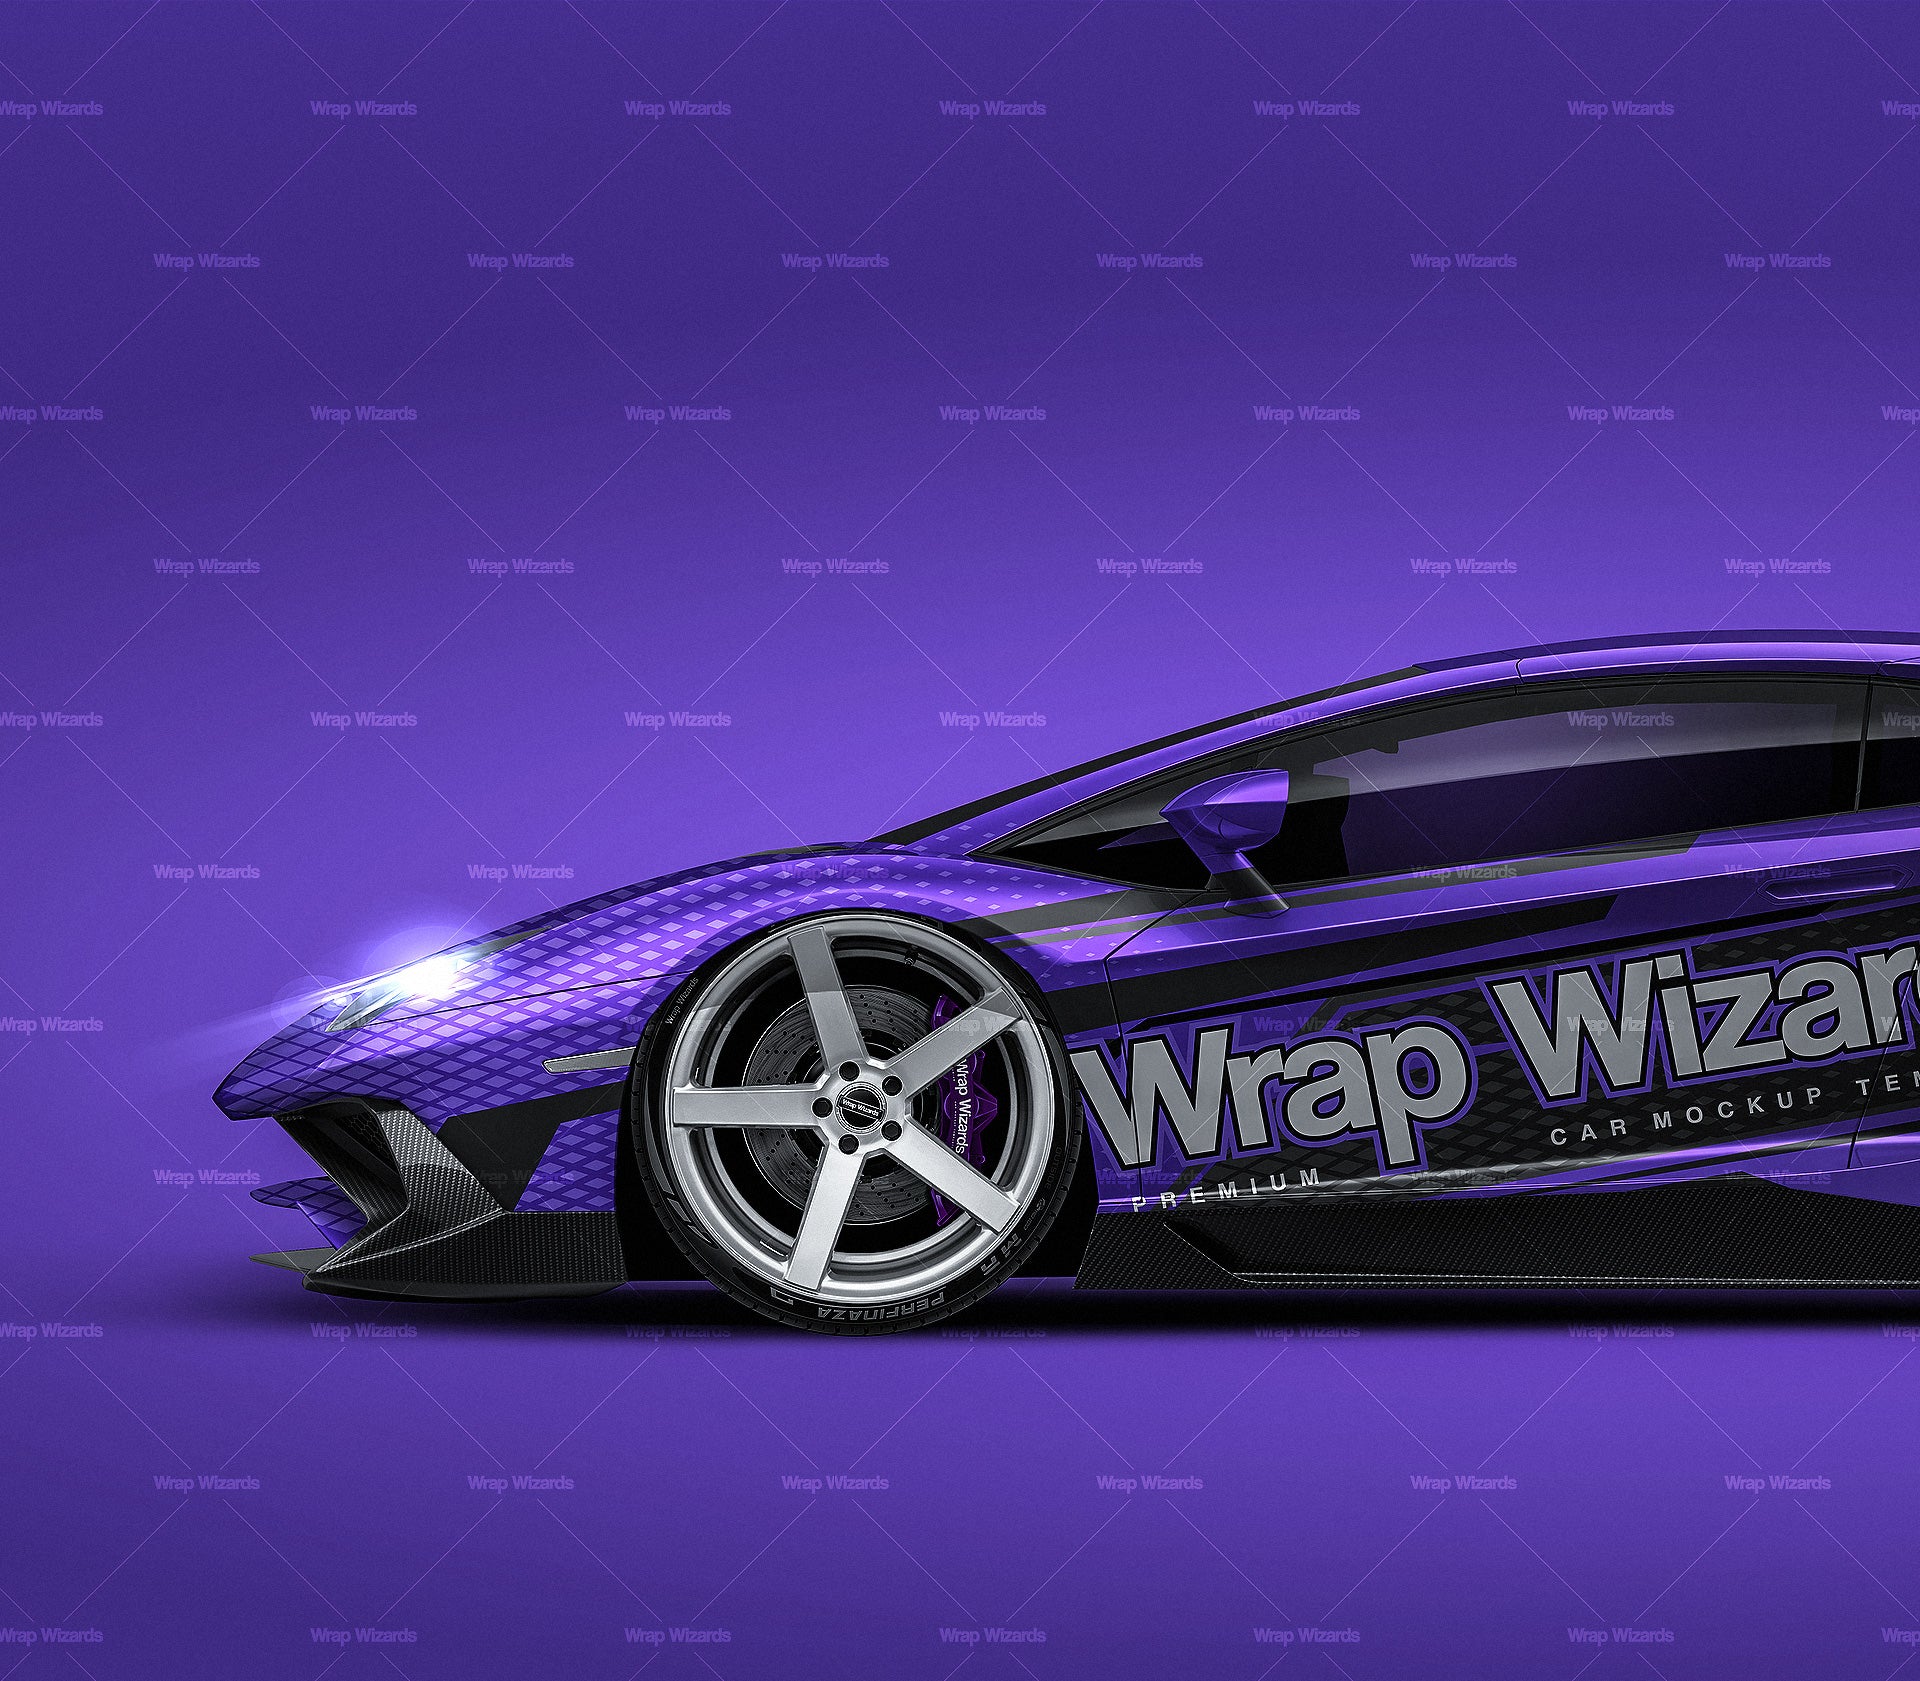 Download Lamborghini Aventador LP750-4 SV Roadster 2016 - all sides Car Mockup - Wrap-Wizards.com ...